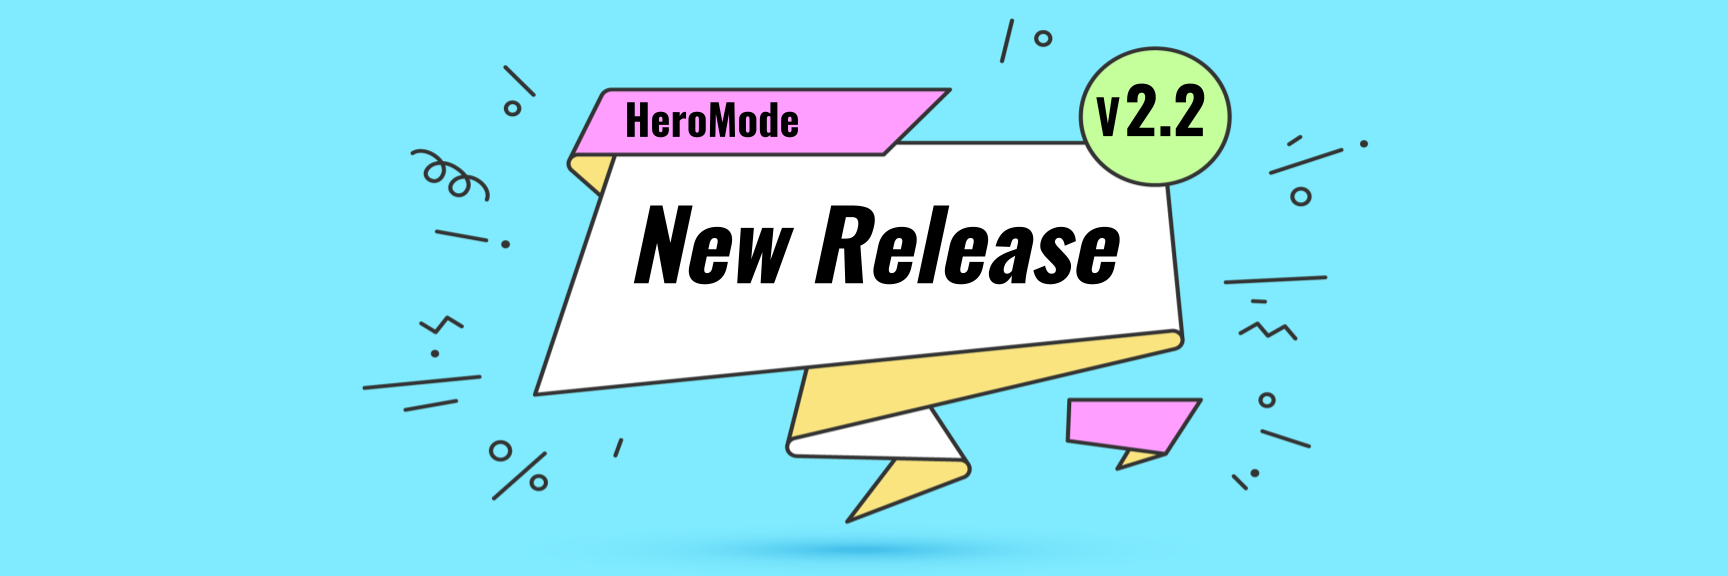 heromode v2.2 ios app has been released in the app store